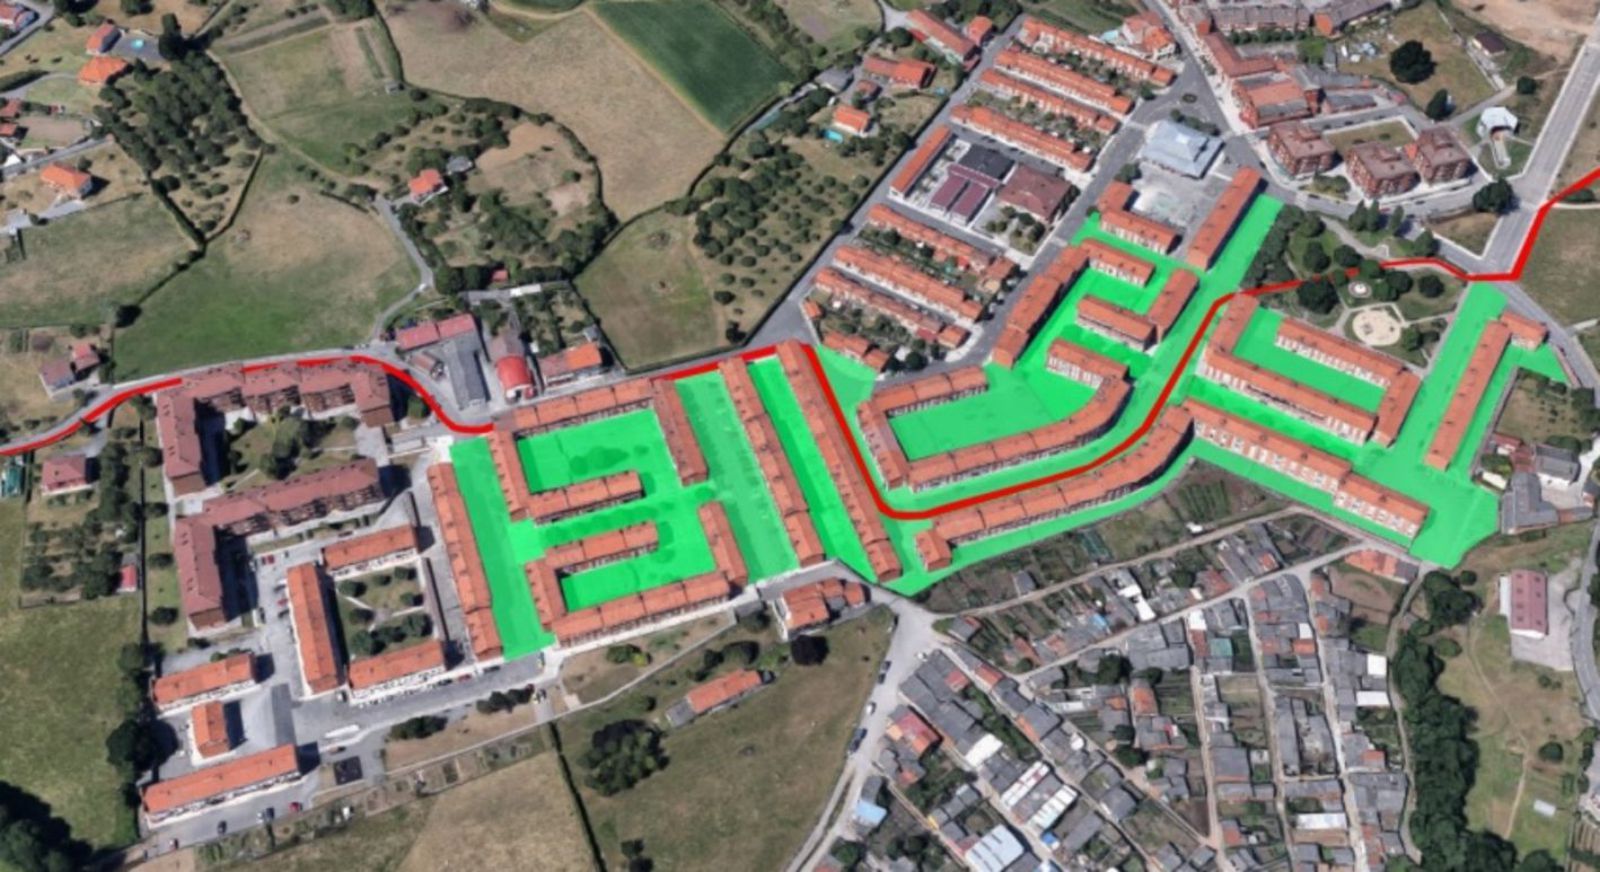 Plan de renaturalización e interconexión de sendas verdes en La Camocha. | Mauro Castro